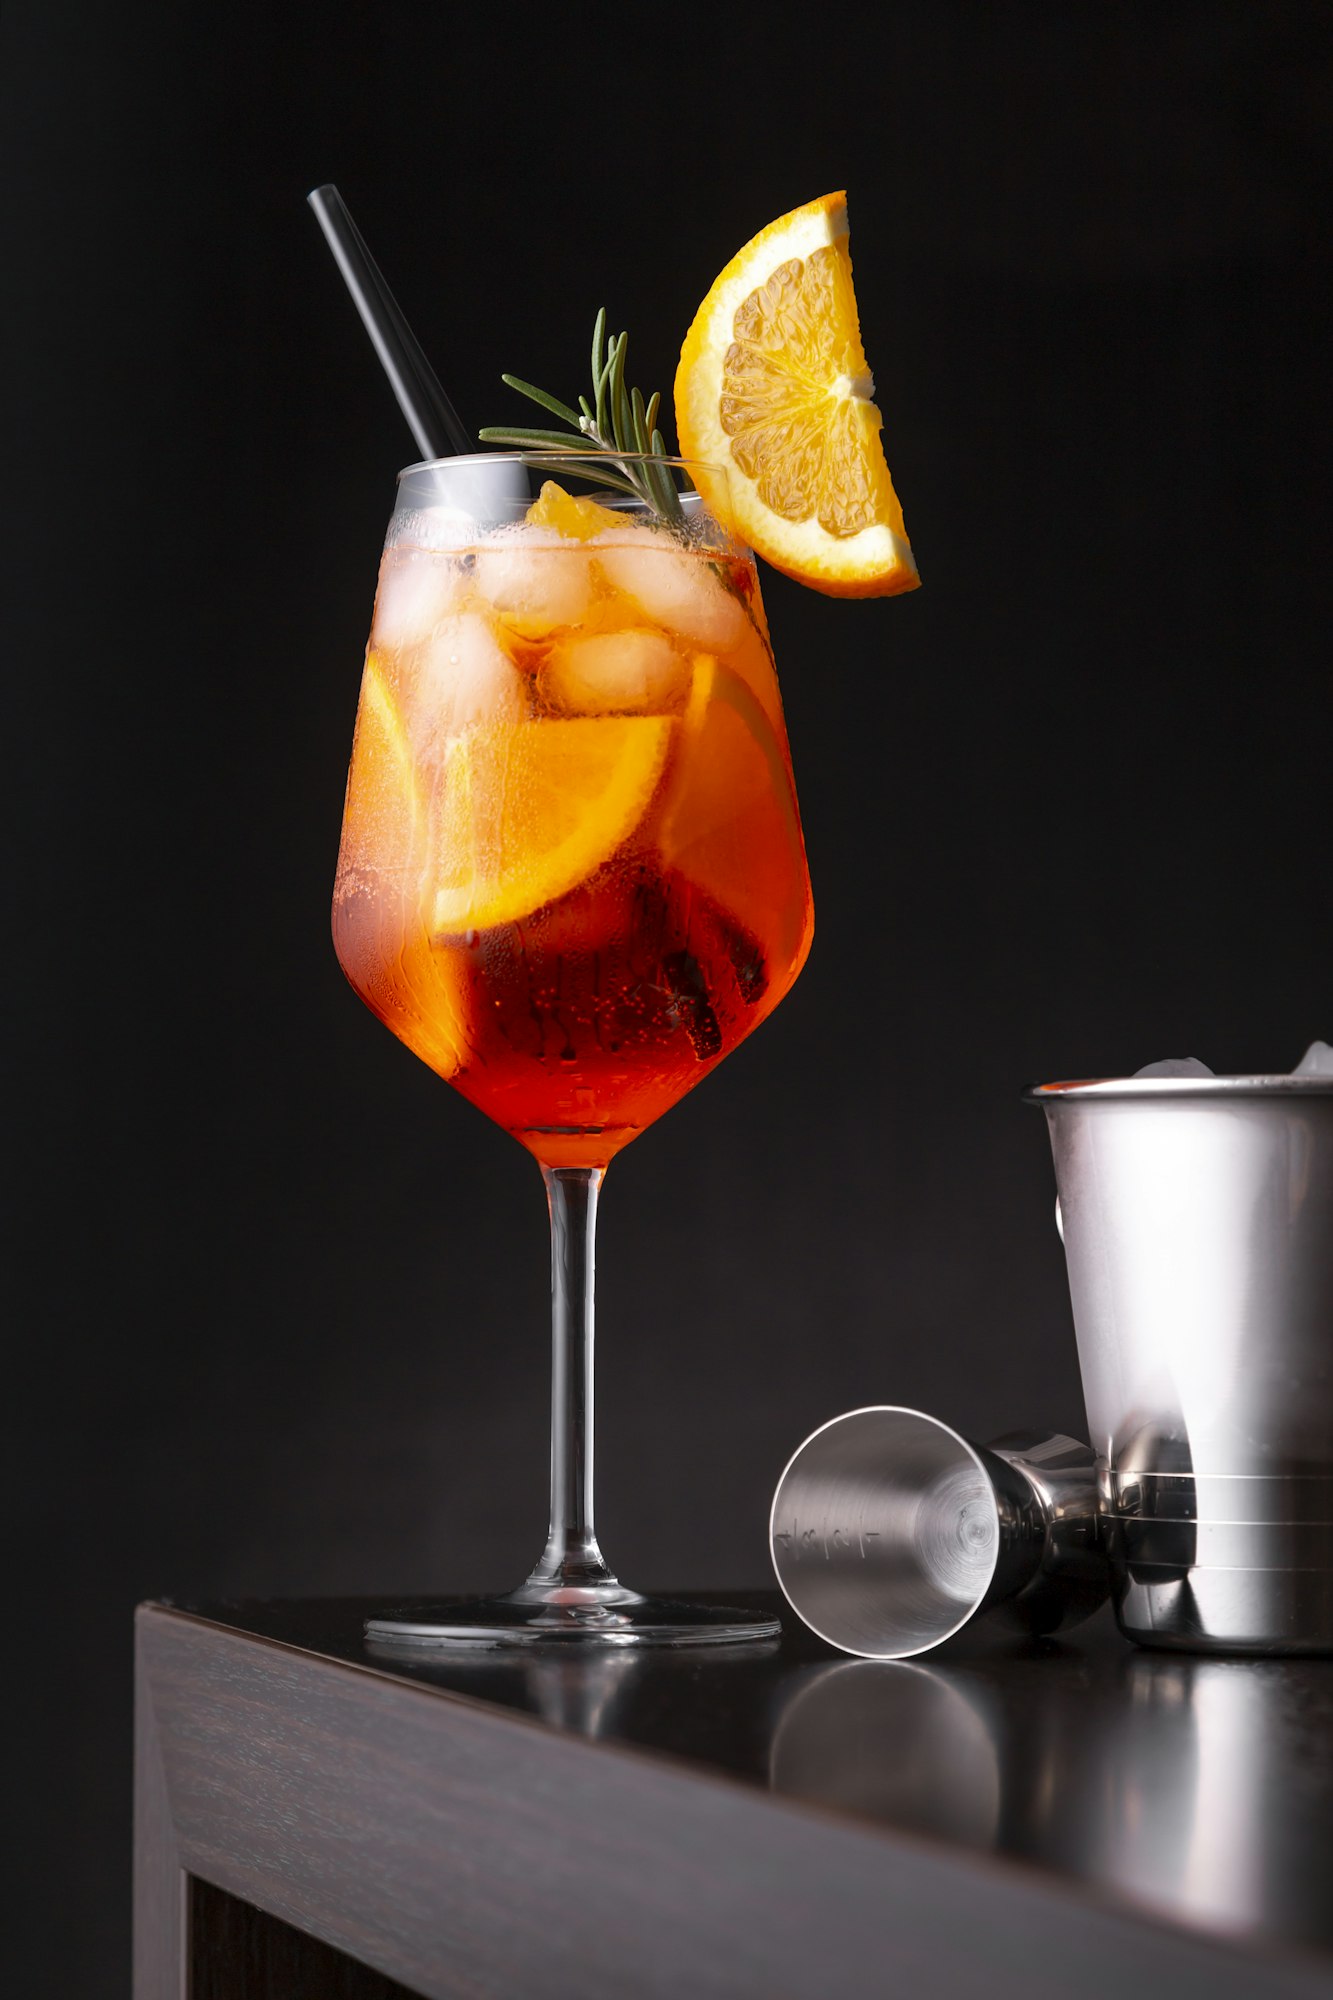 Cold Aperol spritz cocktail